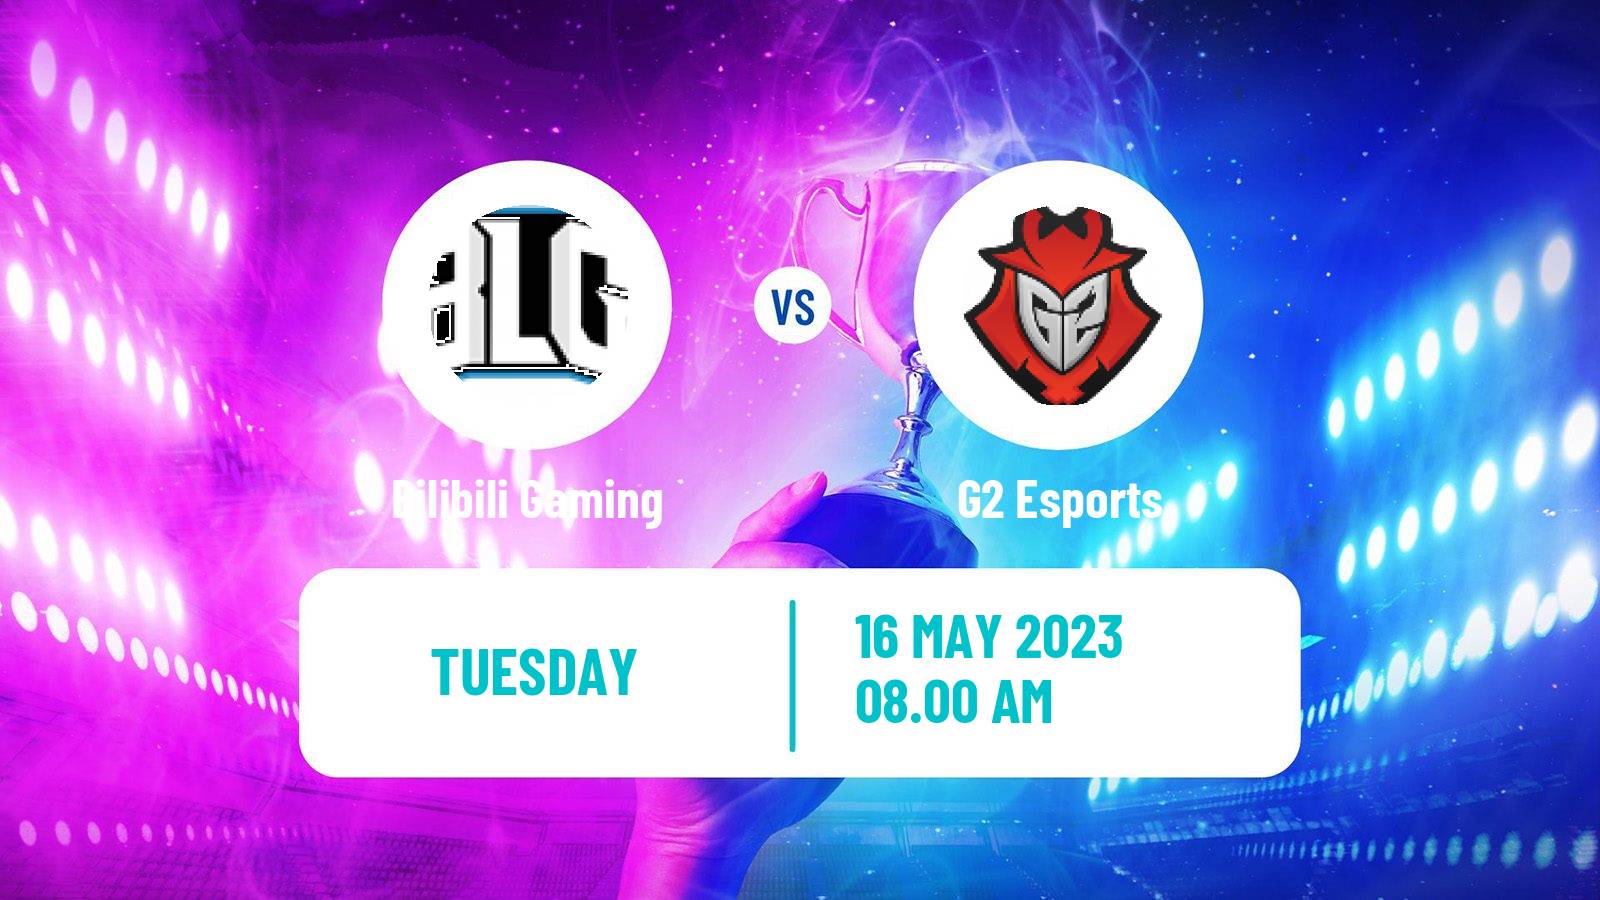 Esports League Of Legends Mid Season Invitational Bilibili Gaming - G2 Esports